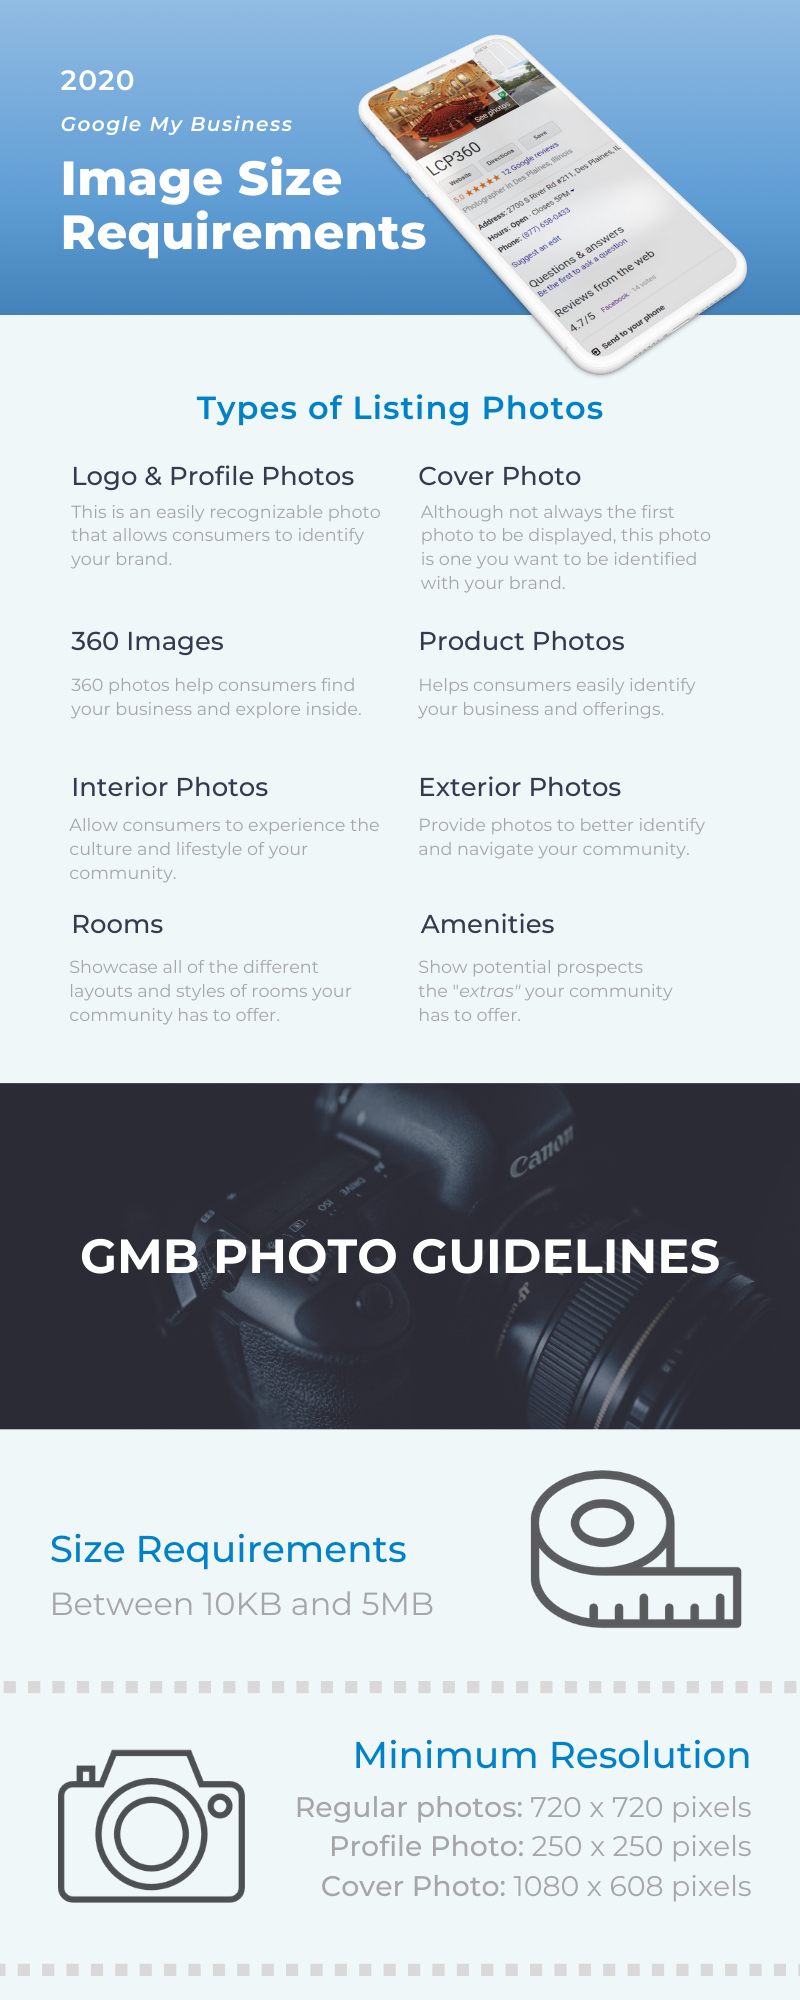 2020 GMB Listing Photo Requirements